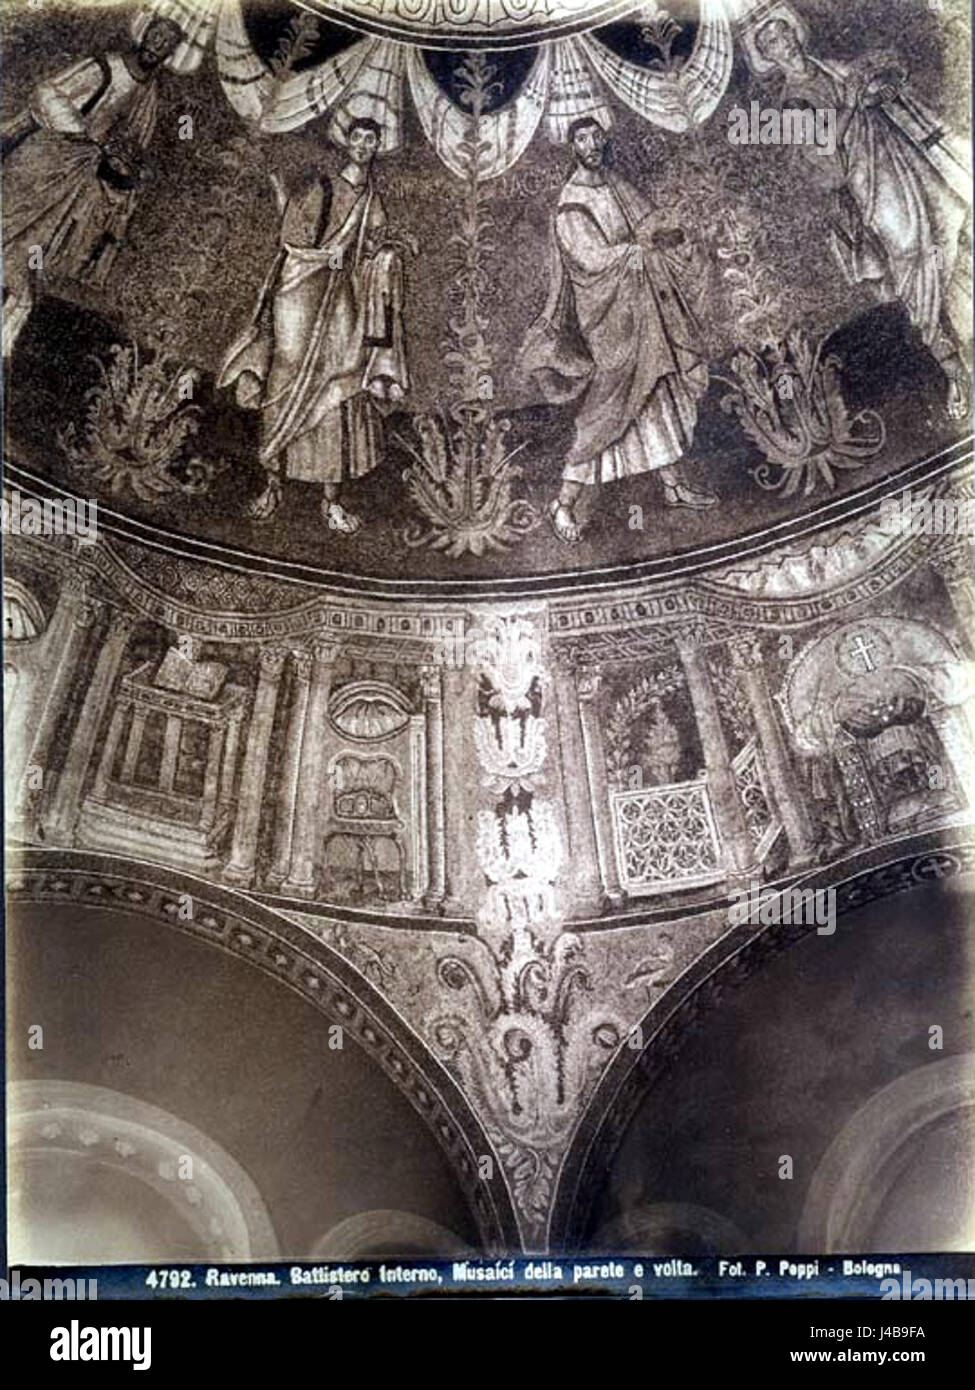 Poppi, Pietro (1833 1914)   n. 4792   Ravenna   Battistero   Interno   Musaici della parete e volta Stock Photo